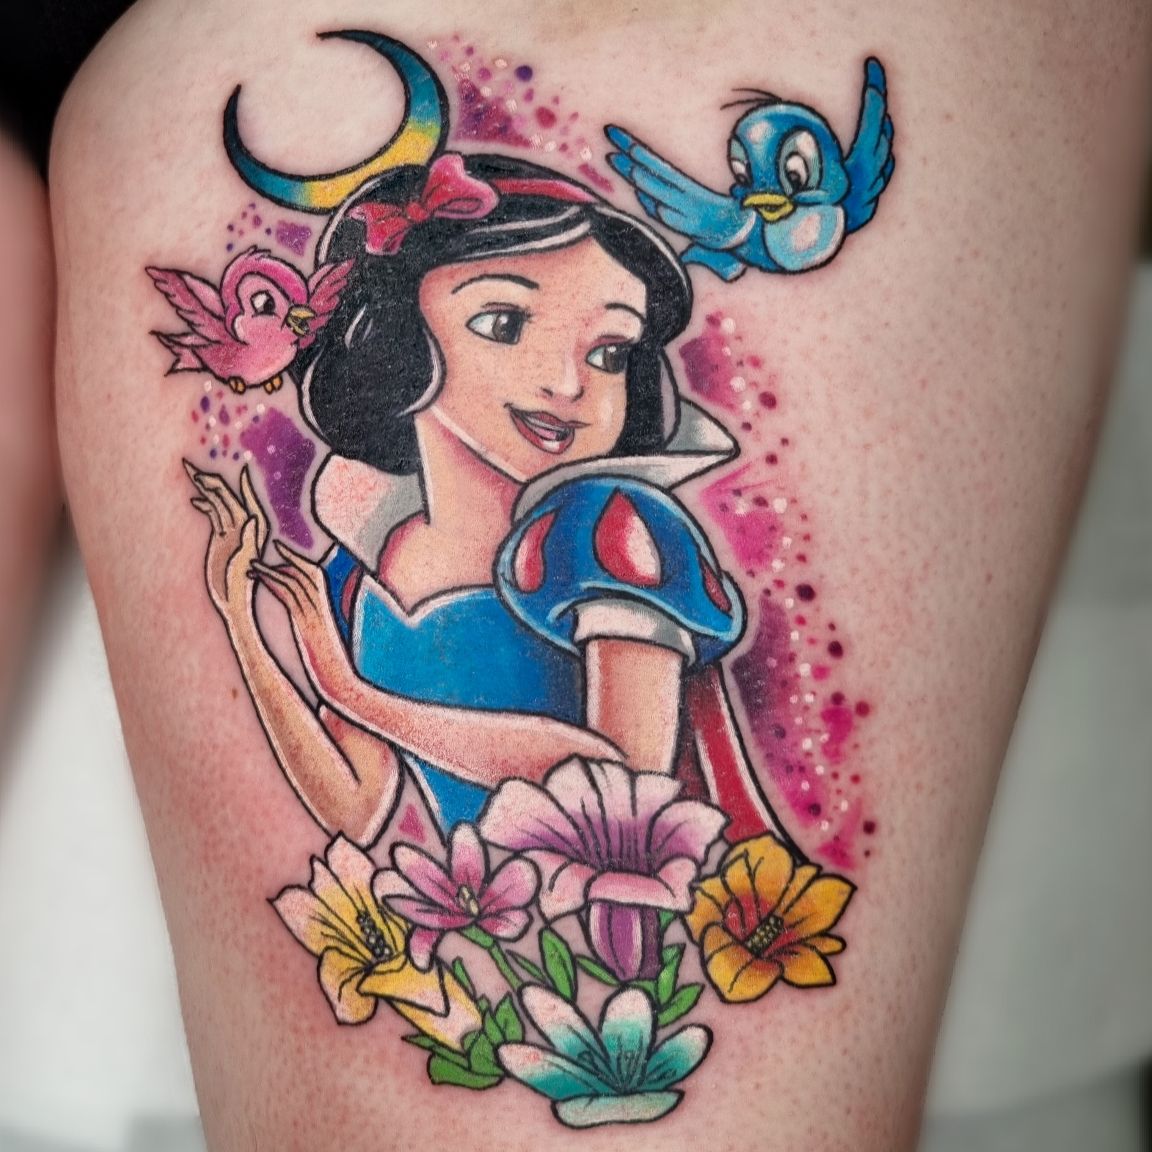 Snow White Tattoo On Thigh - Tattoos Designs